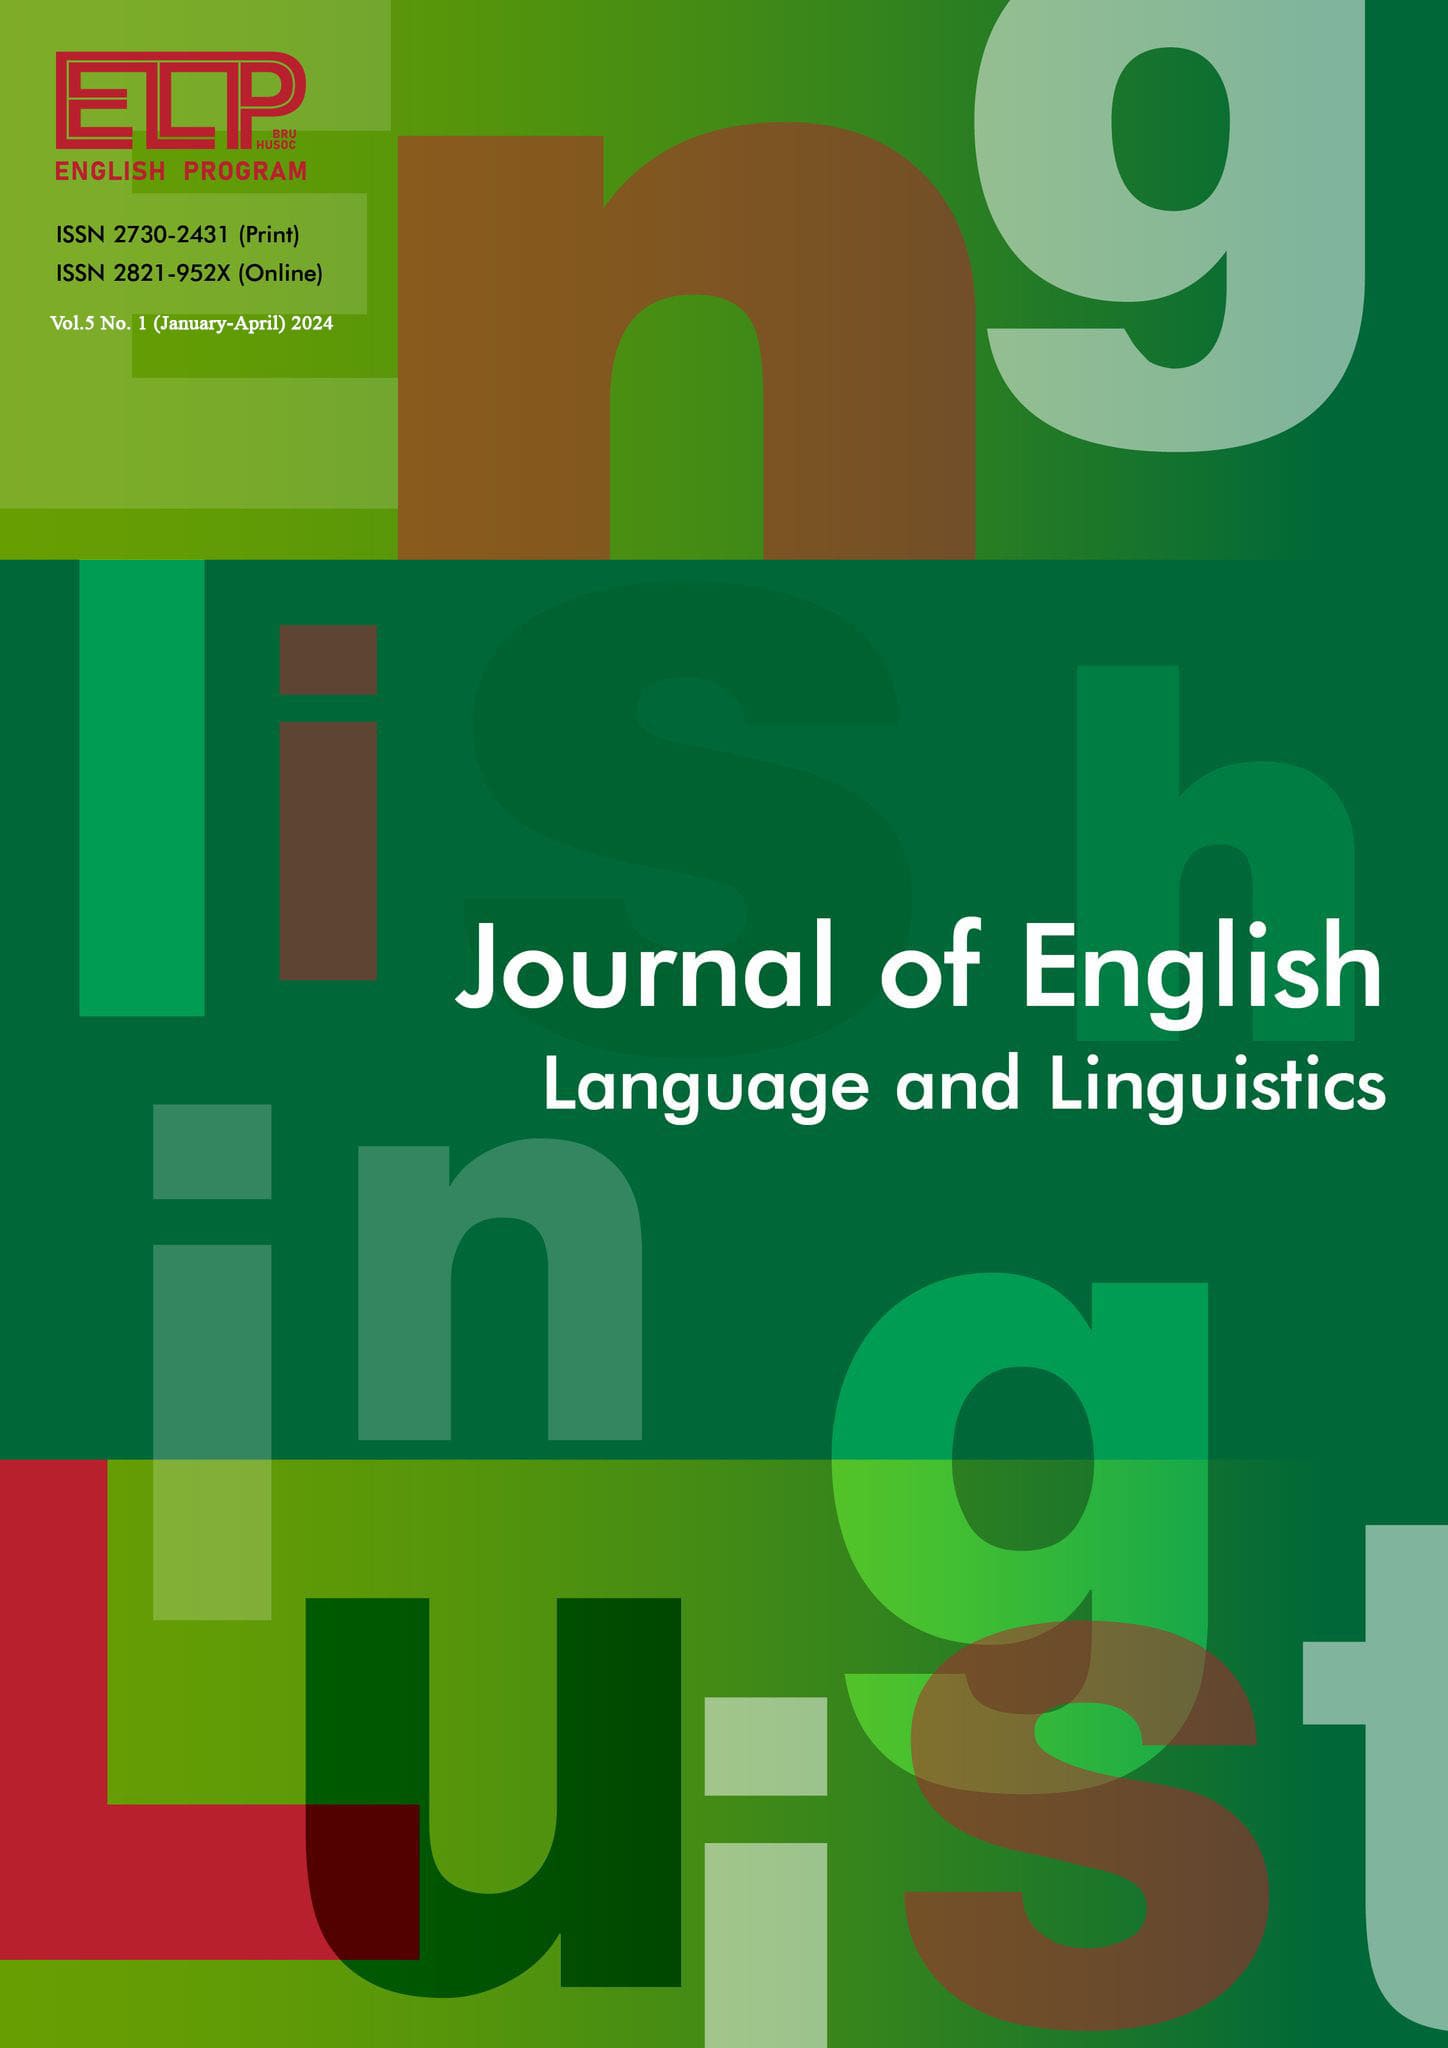 					View Vol. 5 No. 1 (2024):  Journal of English Language and Linguistics (JEL)  (January-April)
				